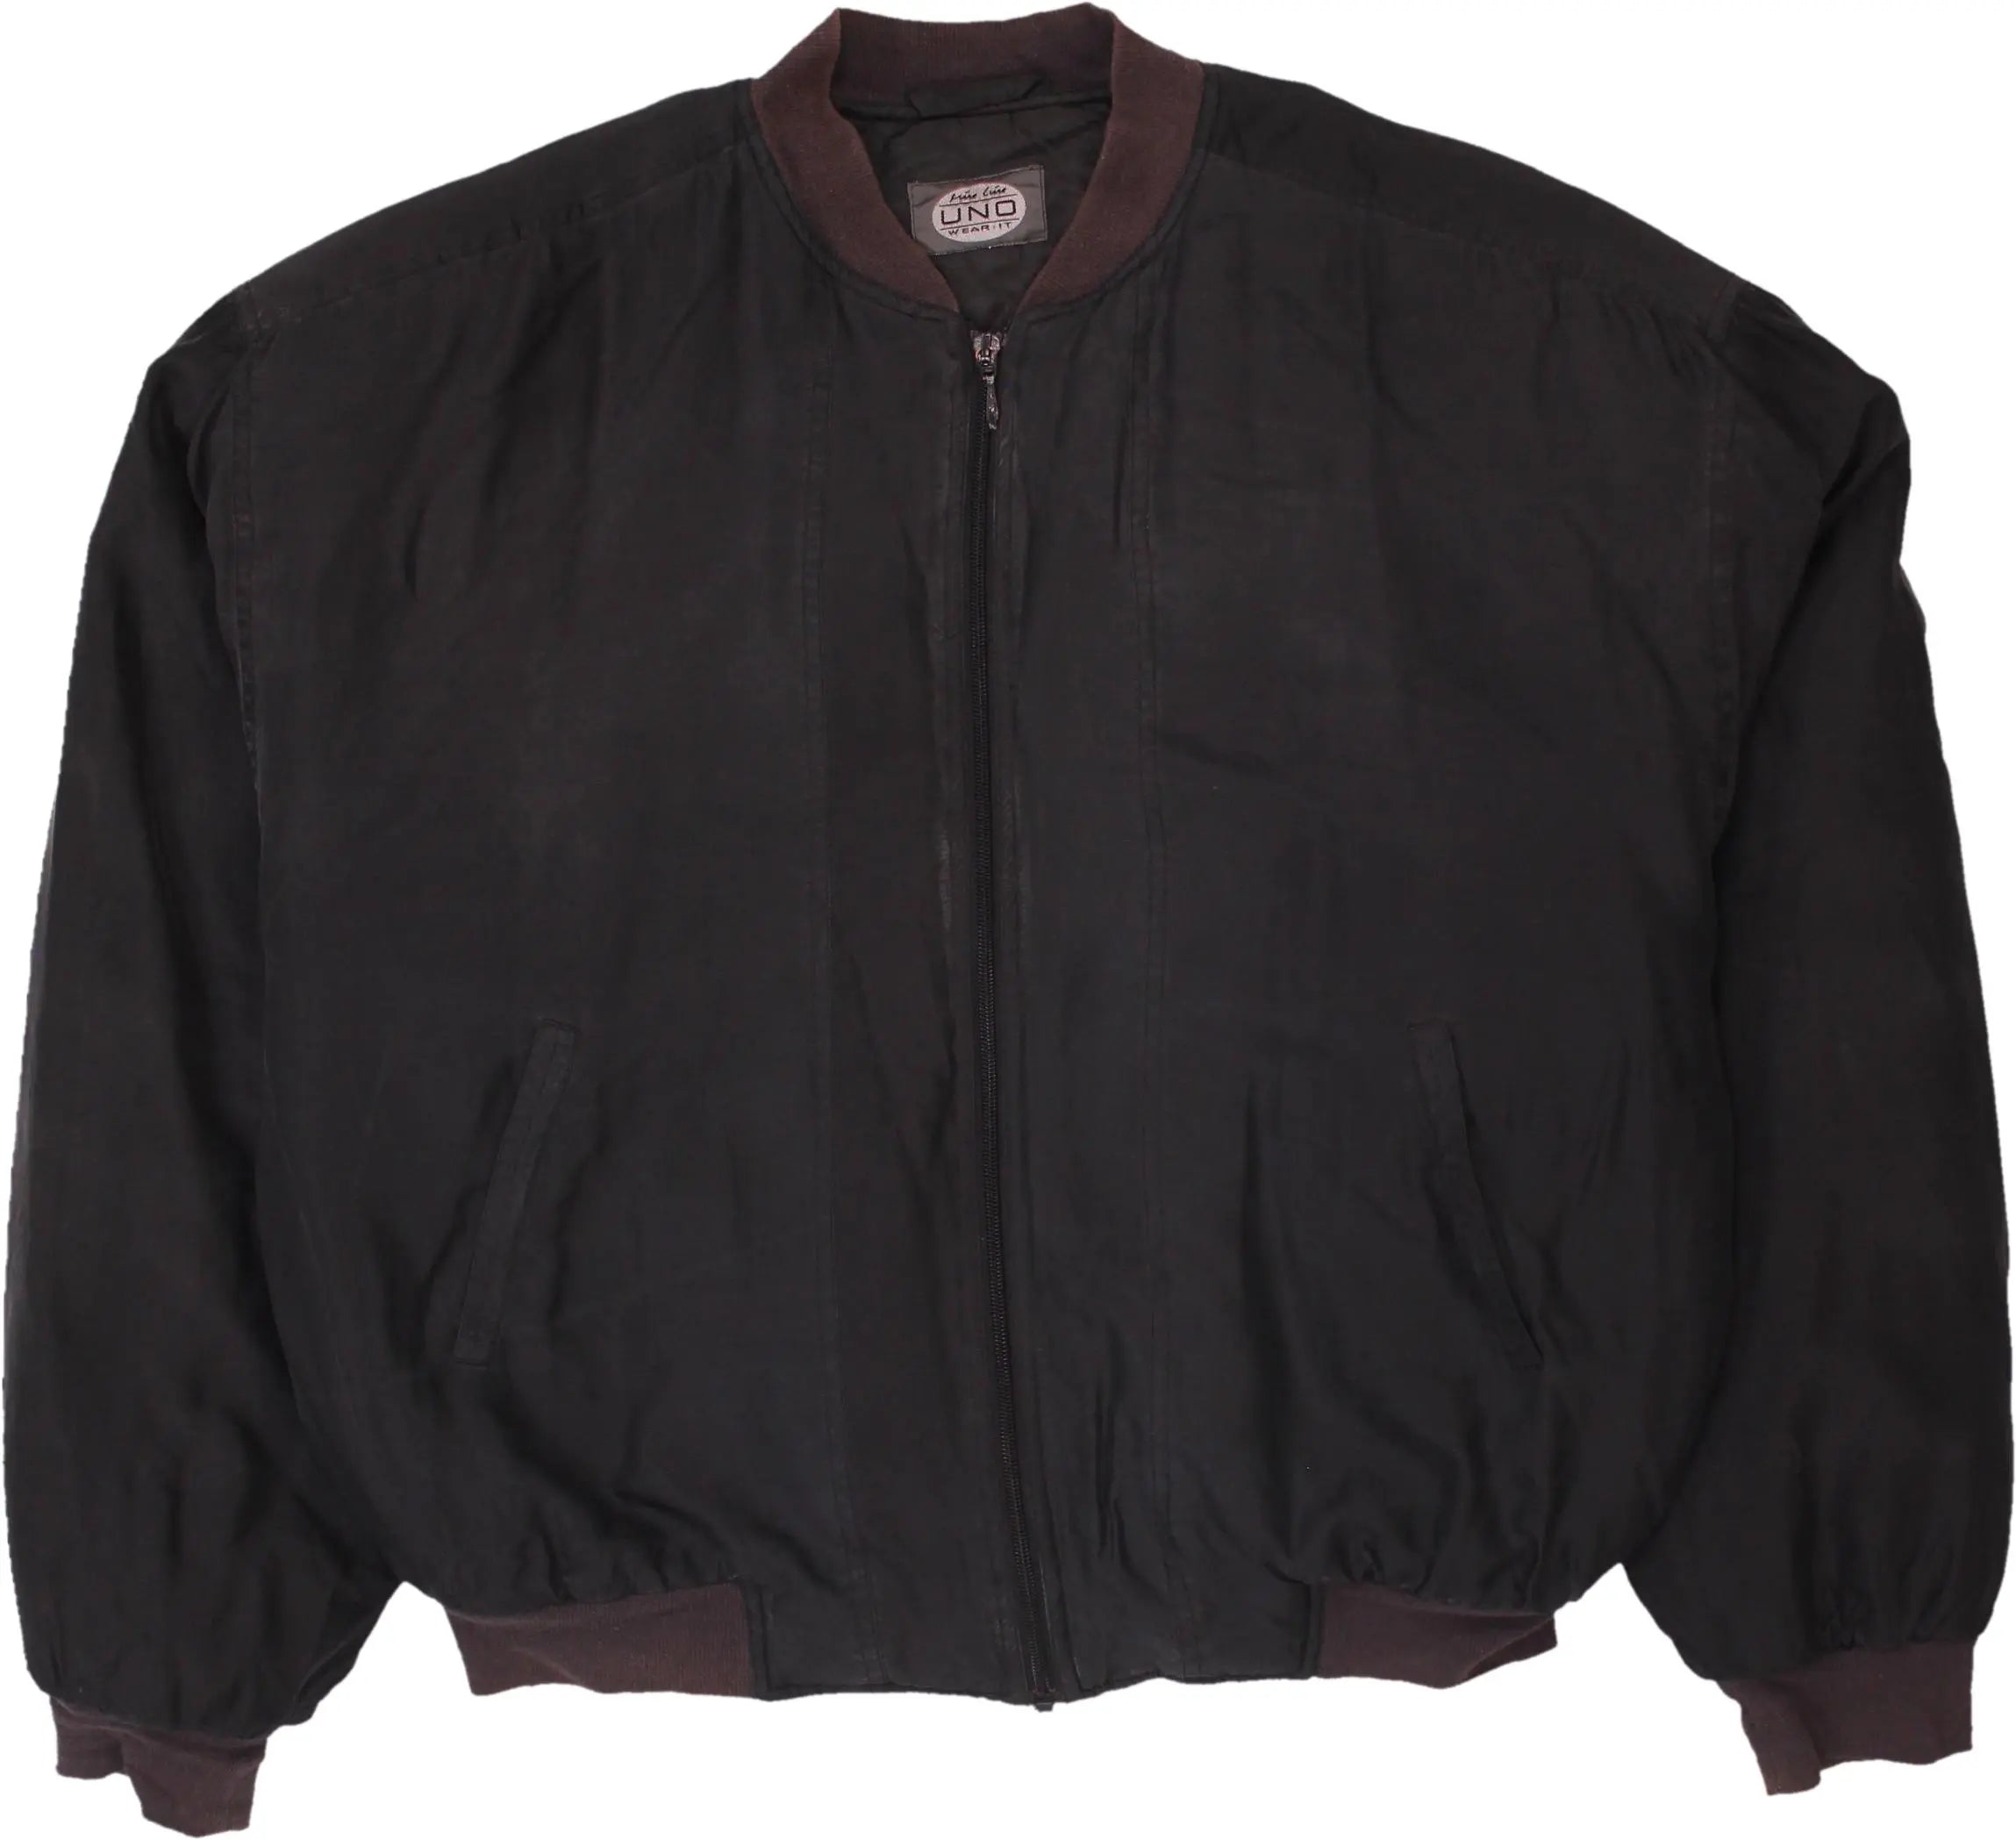 Uno - Vintage 100% Silk Bomber Jacket with Shoulder Pads- ThriftTale.com - Vintage and second handclothing